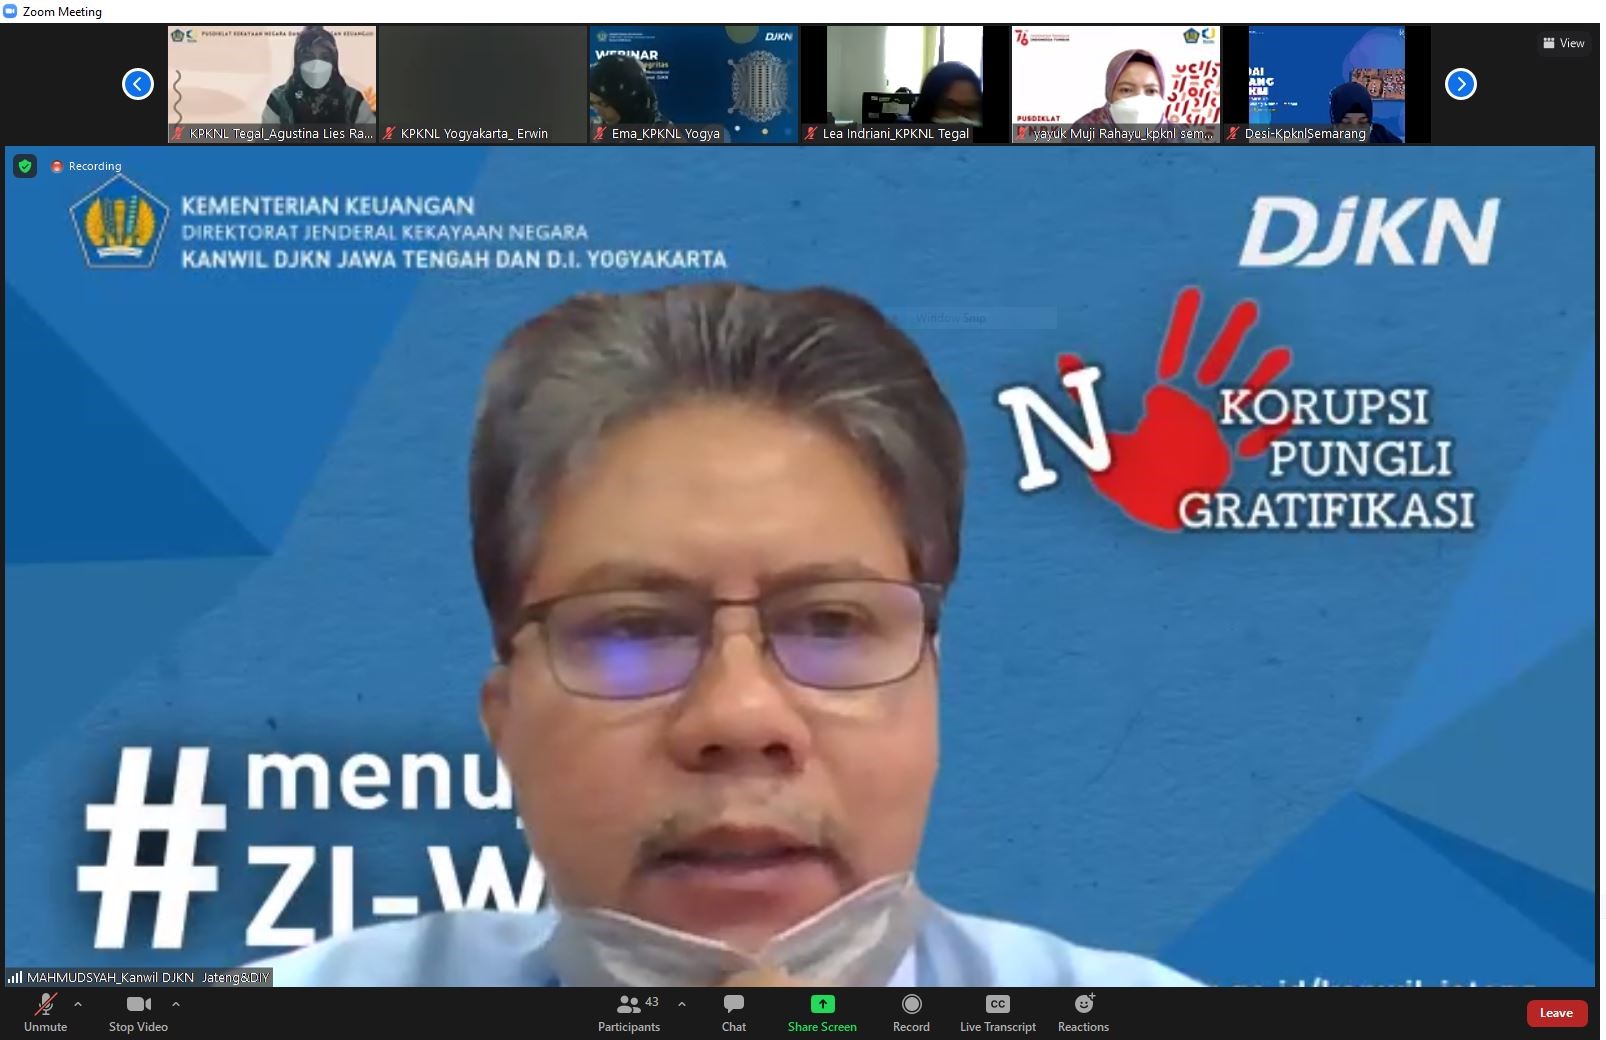 Perdana, Kanwil DJKN Jateng DIY Gelar "Kopi Semar" Sebagai Forum Diskusi Guna Penyelesaian Permasalahan Terkait Tusi DJKN